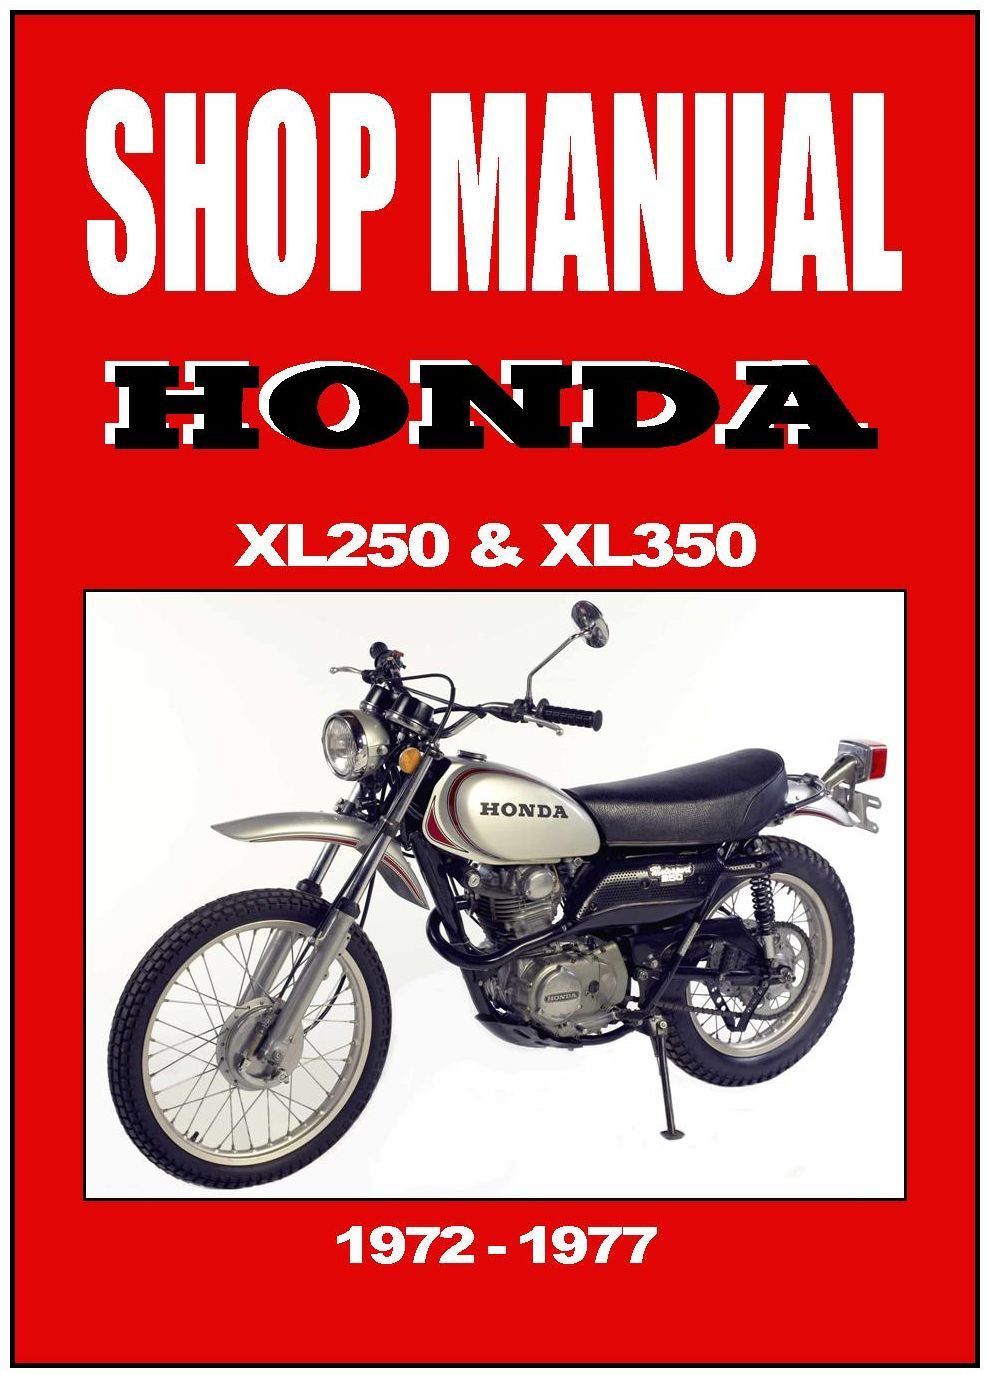 The Honda Xl 250k3